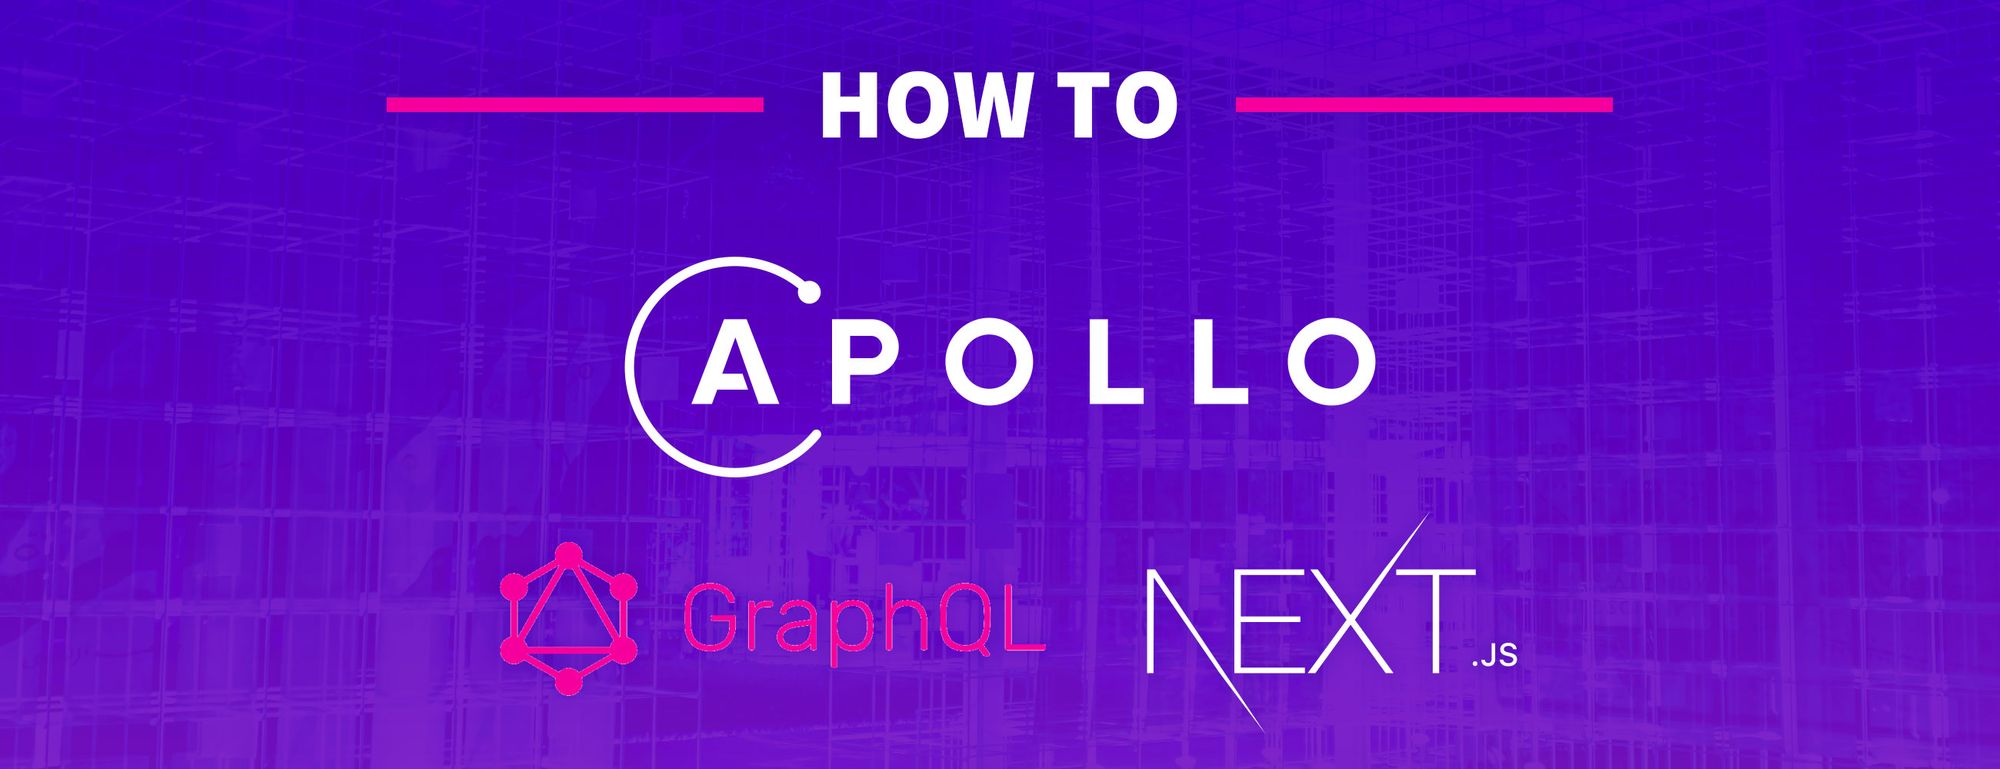 How to Fetch GraphQL Data in Next.js with Apollo GraphQL